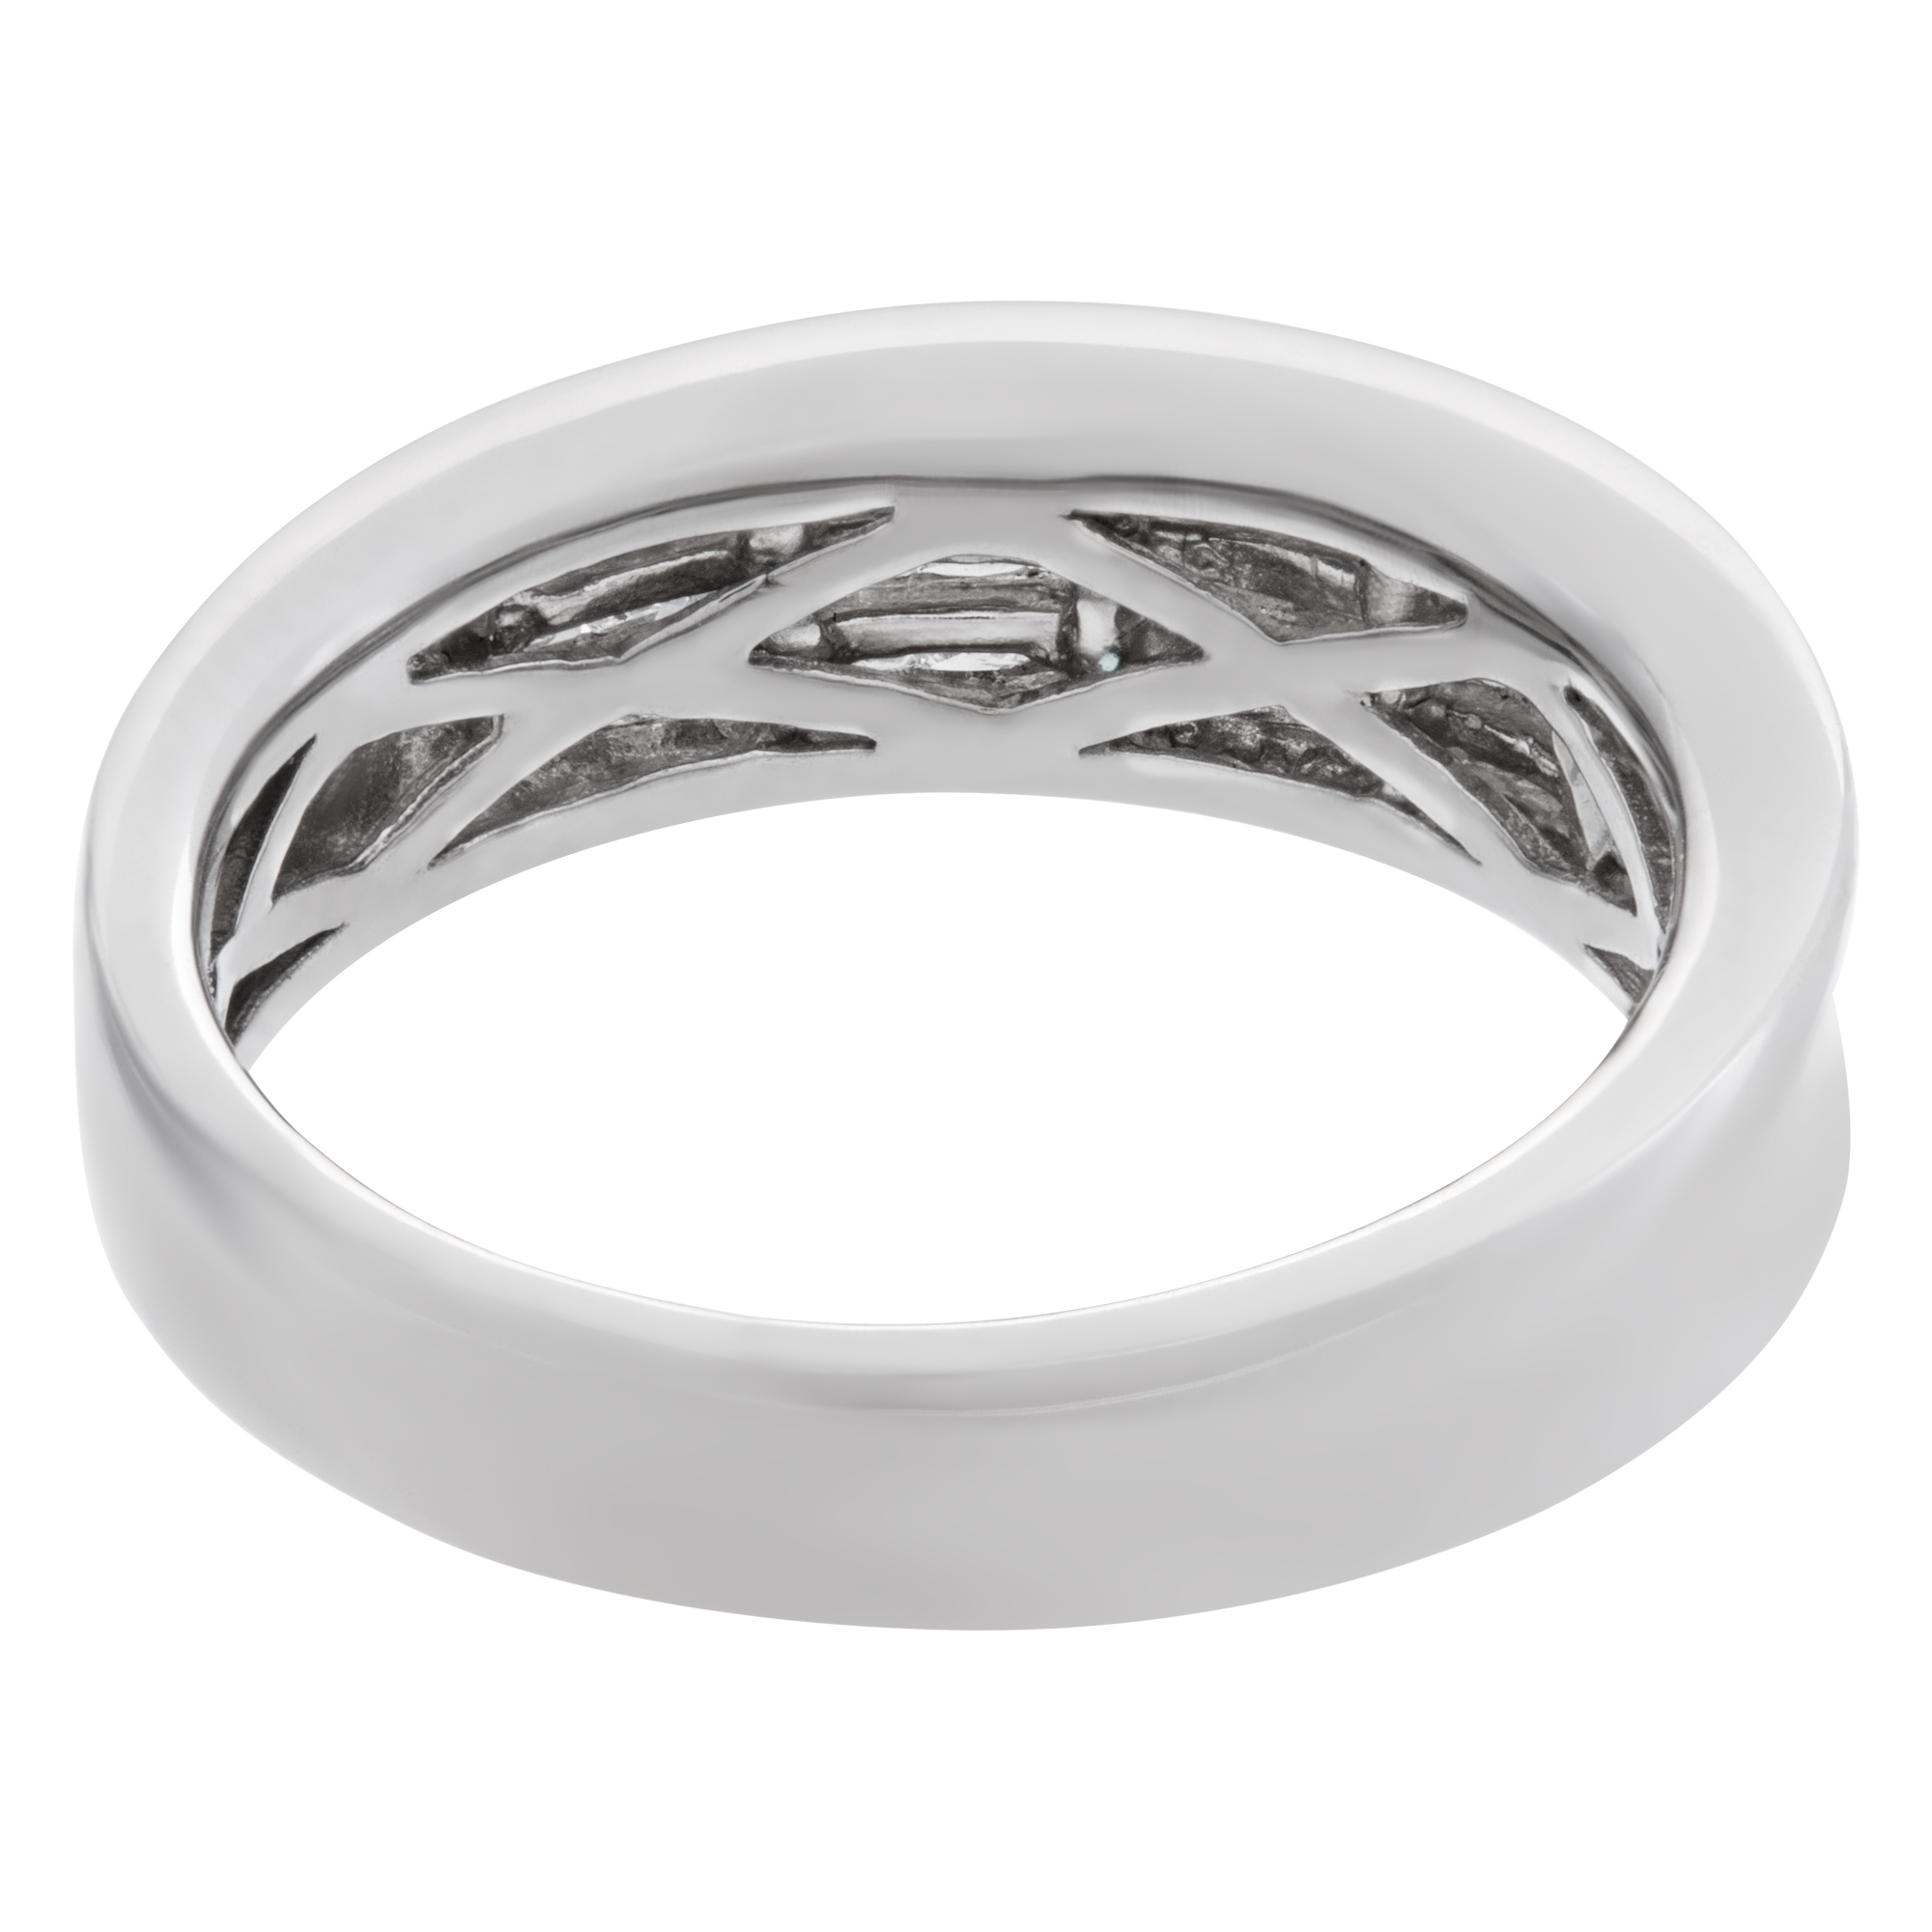 Princess Cut Diamond Ring Set In 18k White Gold. 0.75 carat In Diamonds. Size 7 image 5